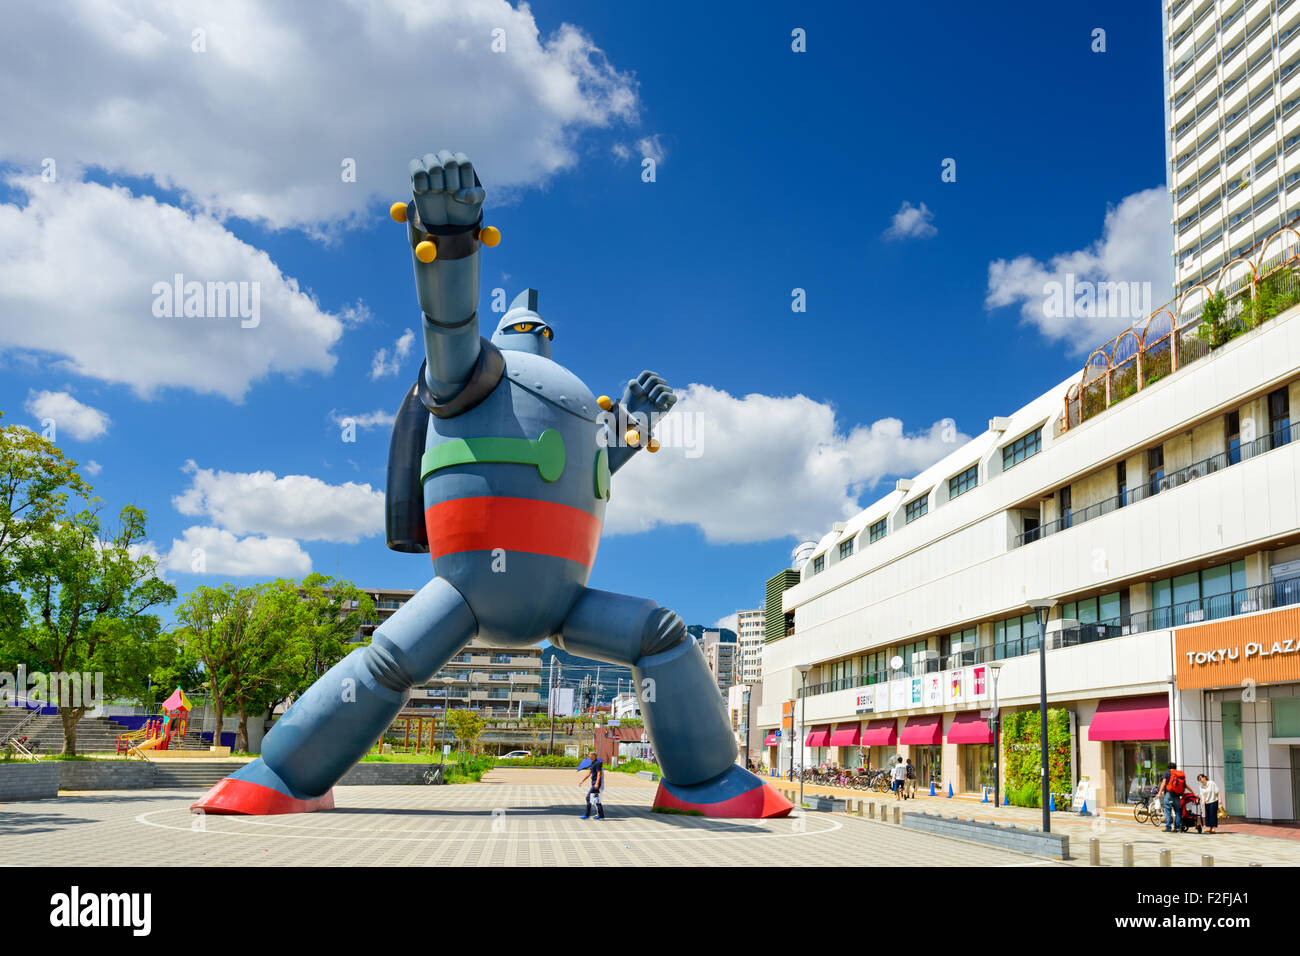 The Gigantor robot monument at Shin-nagata Station in Kobe, Japan. Stock Photo